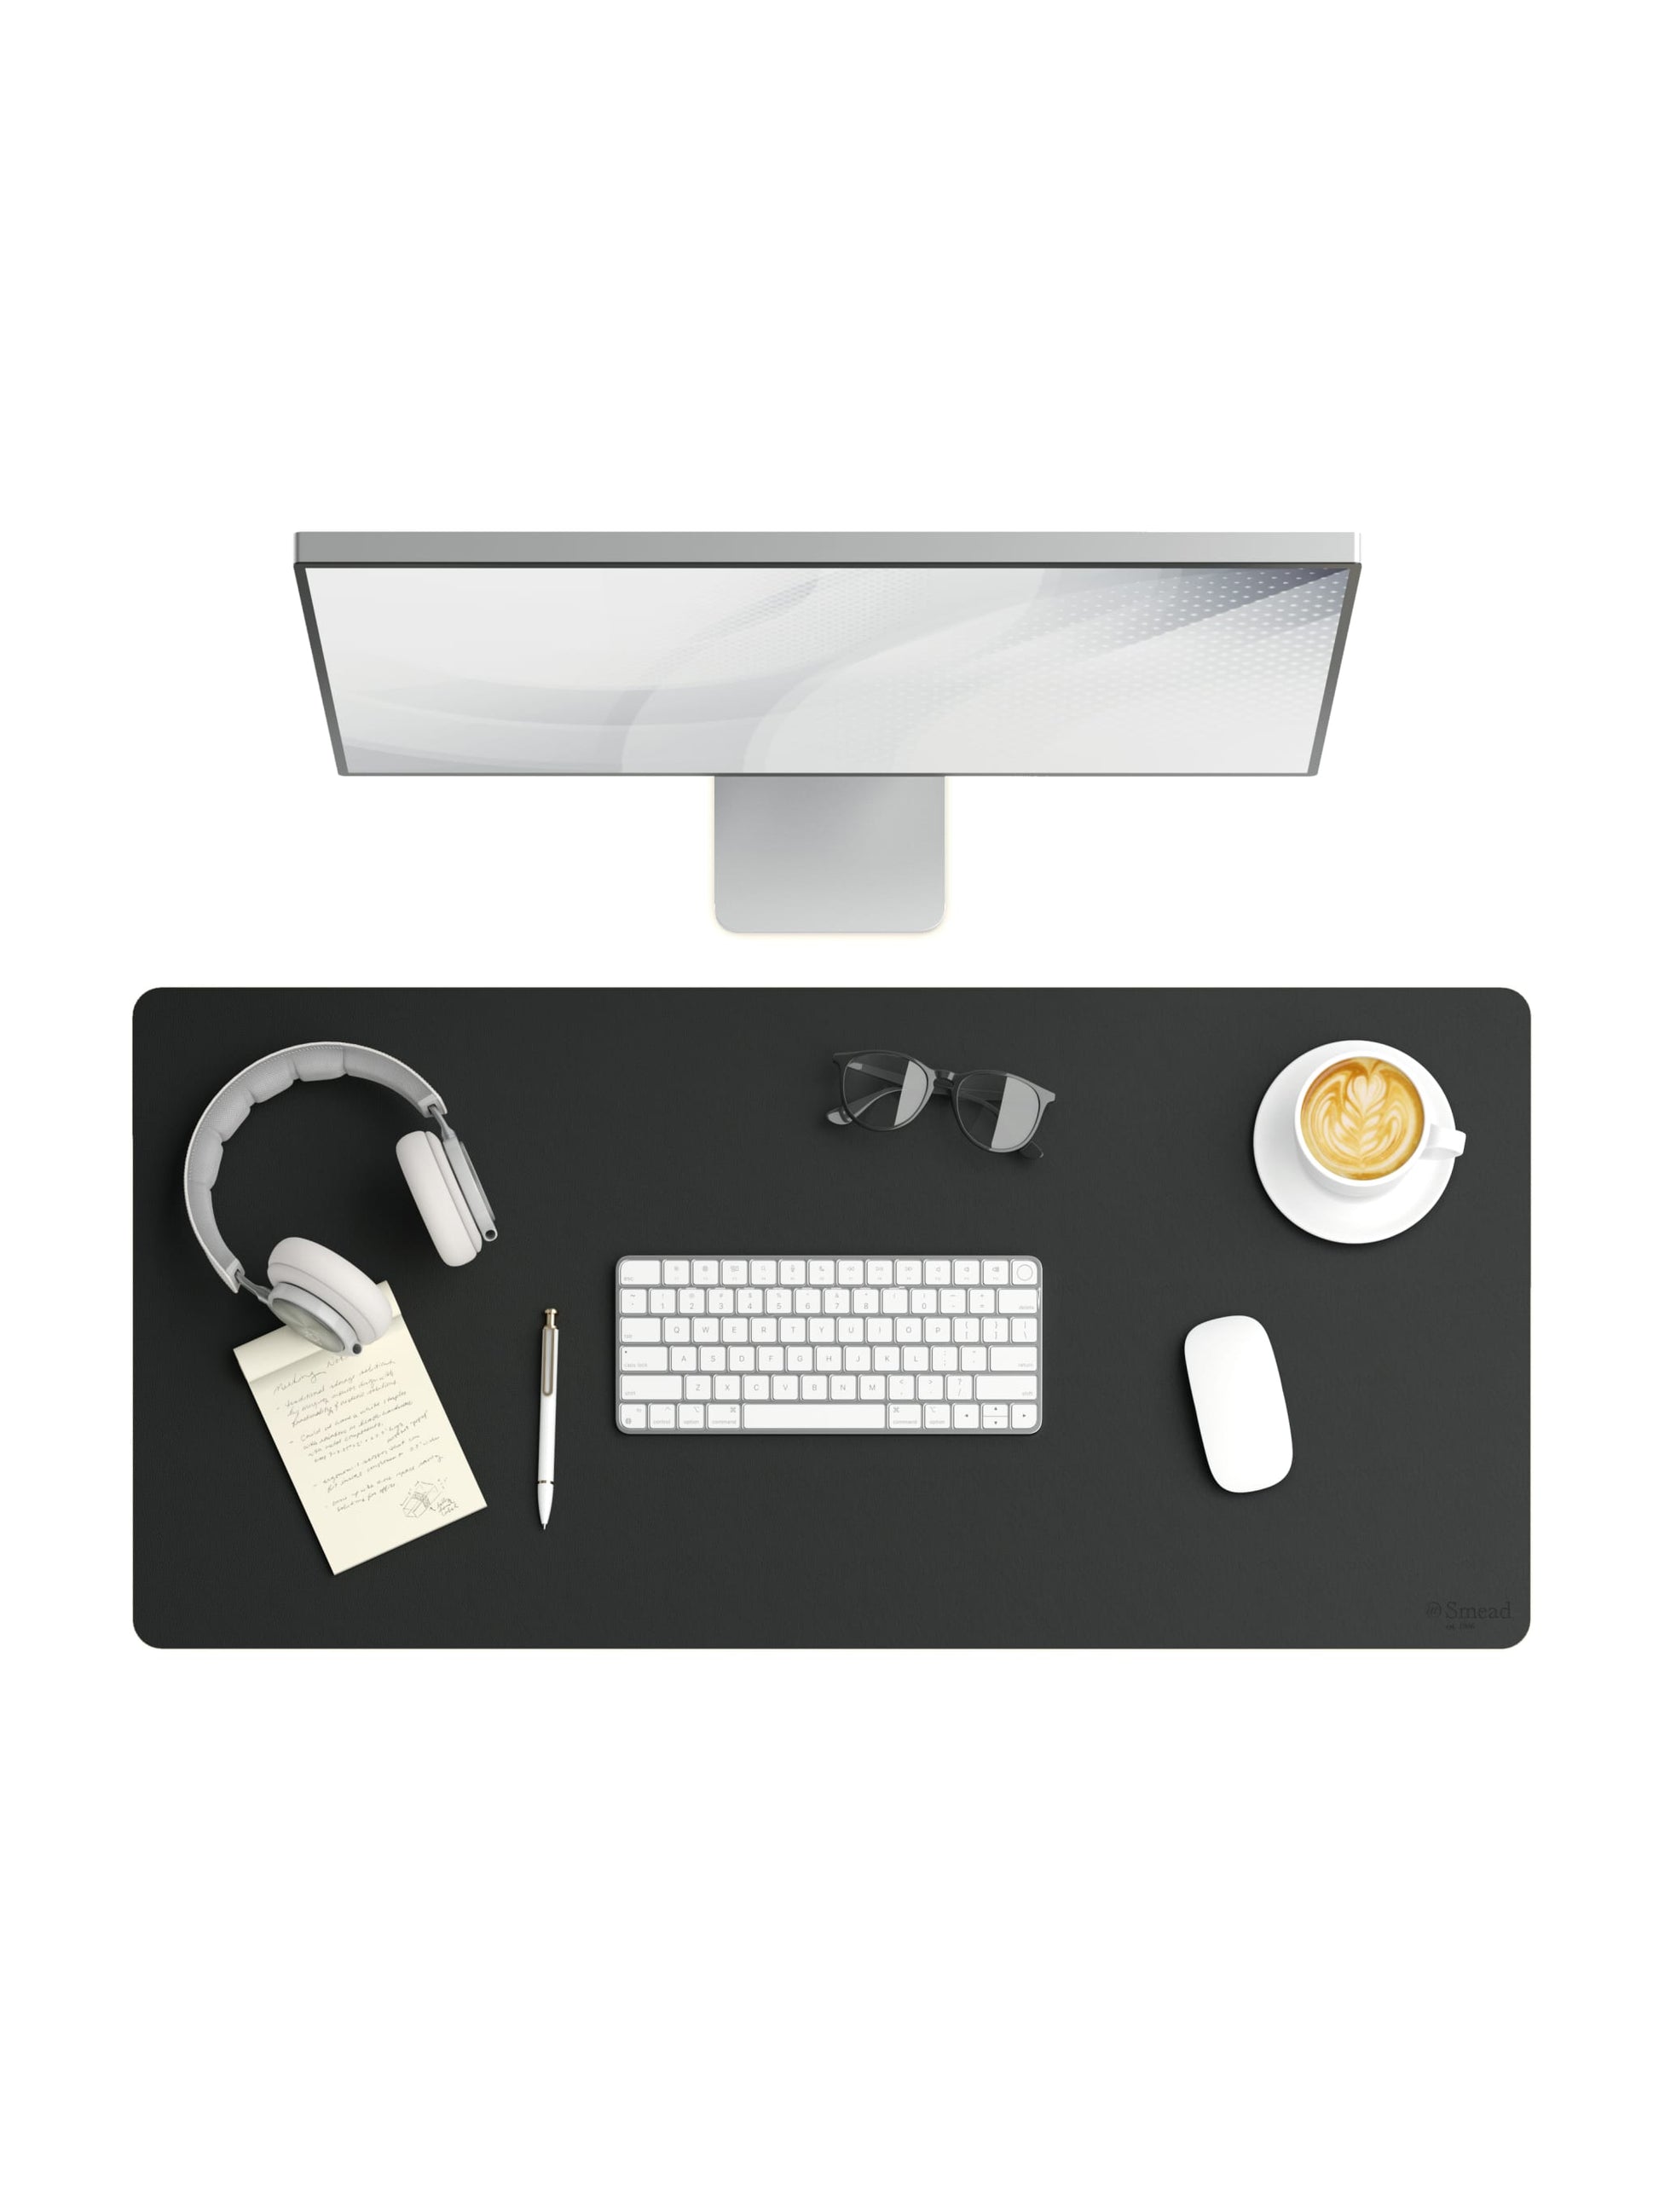 Vegan Leather Desk Pad, Charcoal Color, 36"X17" Size, 086486648288